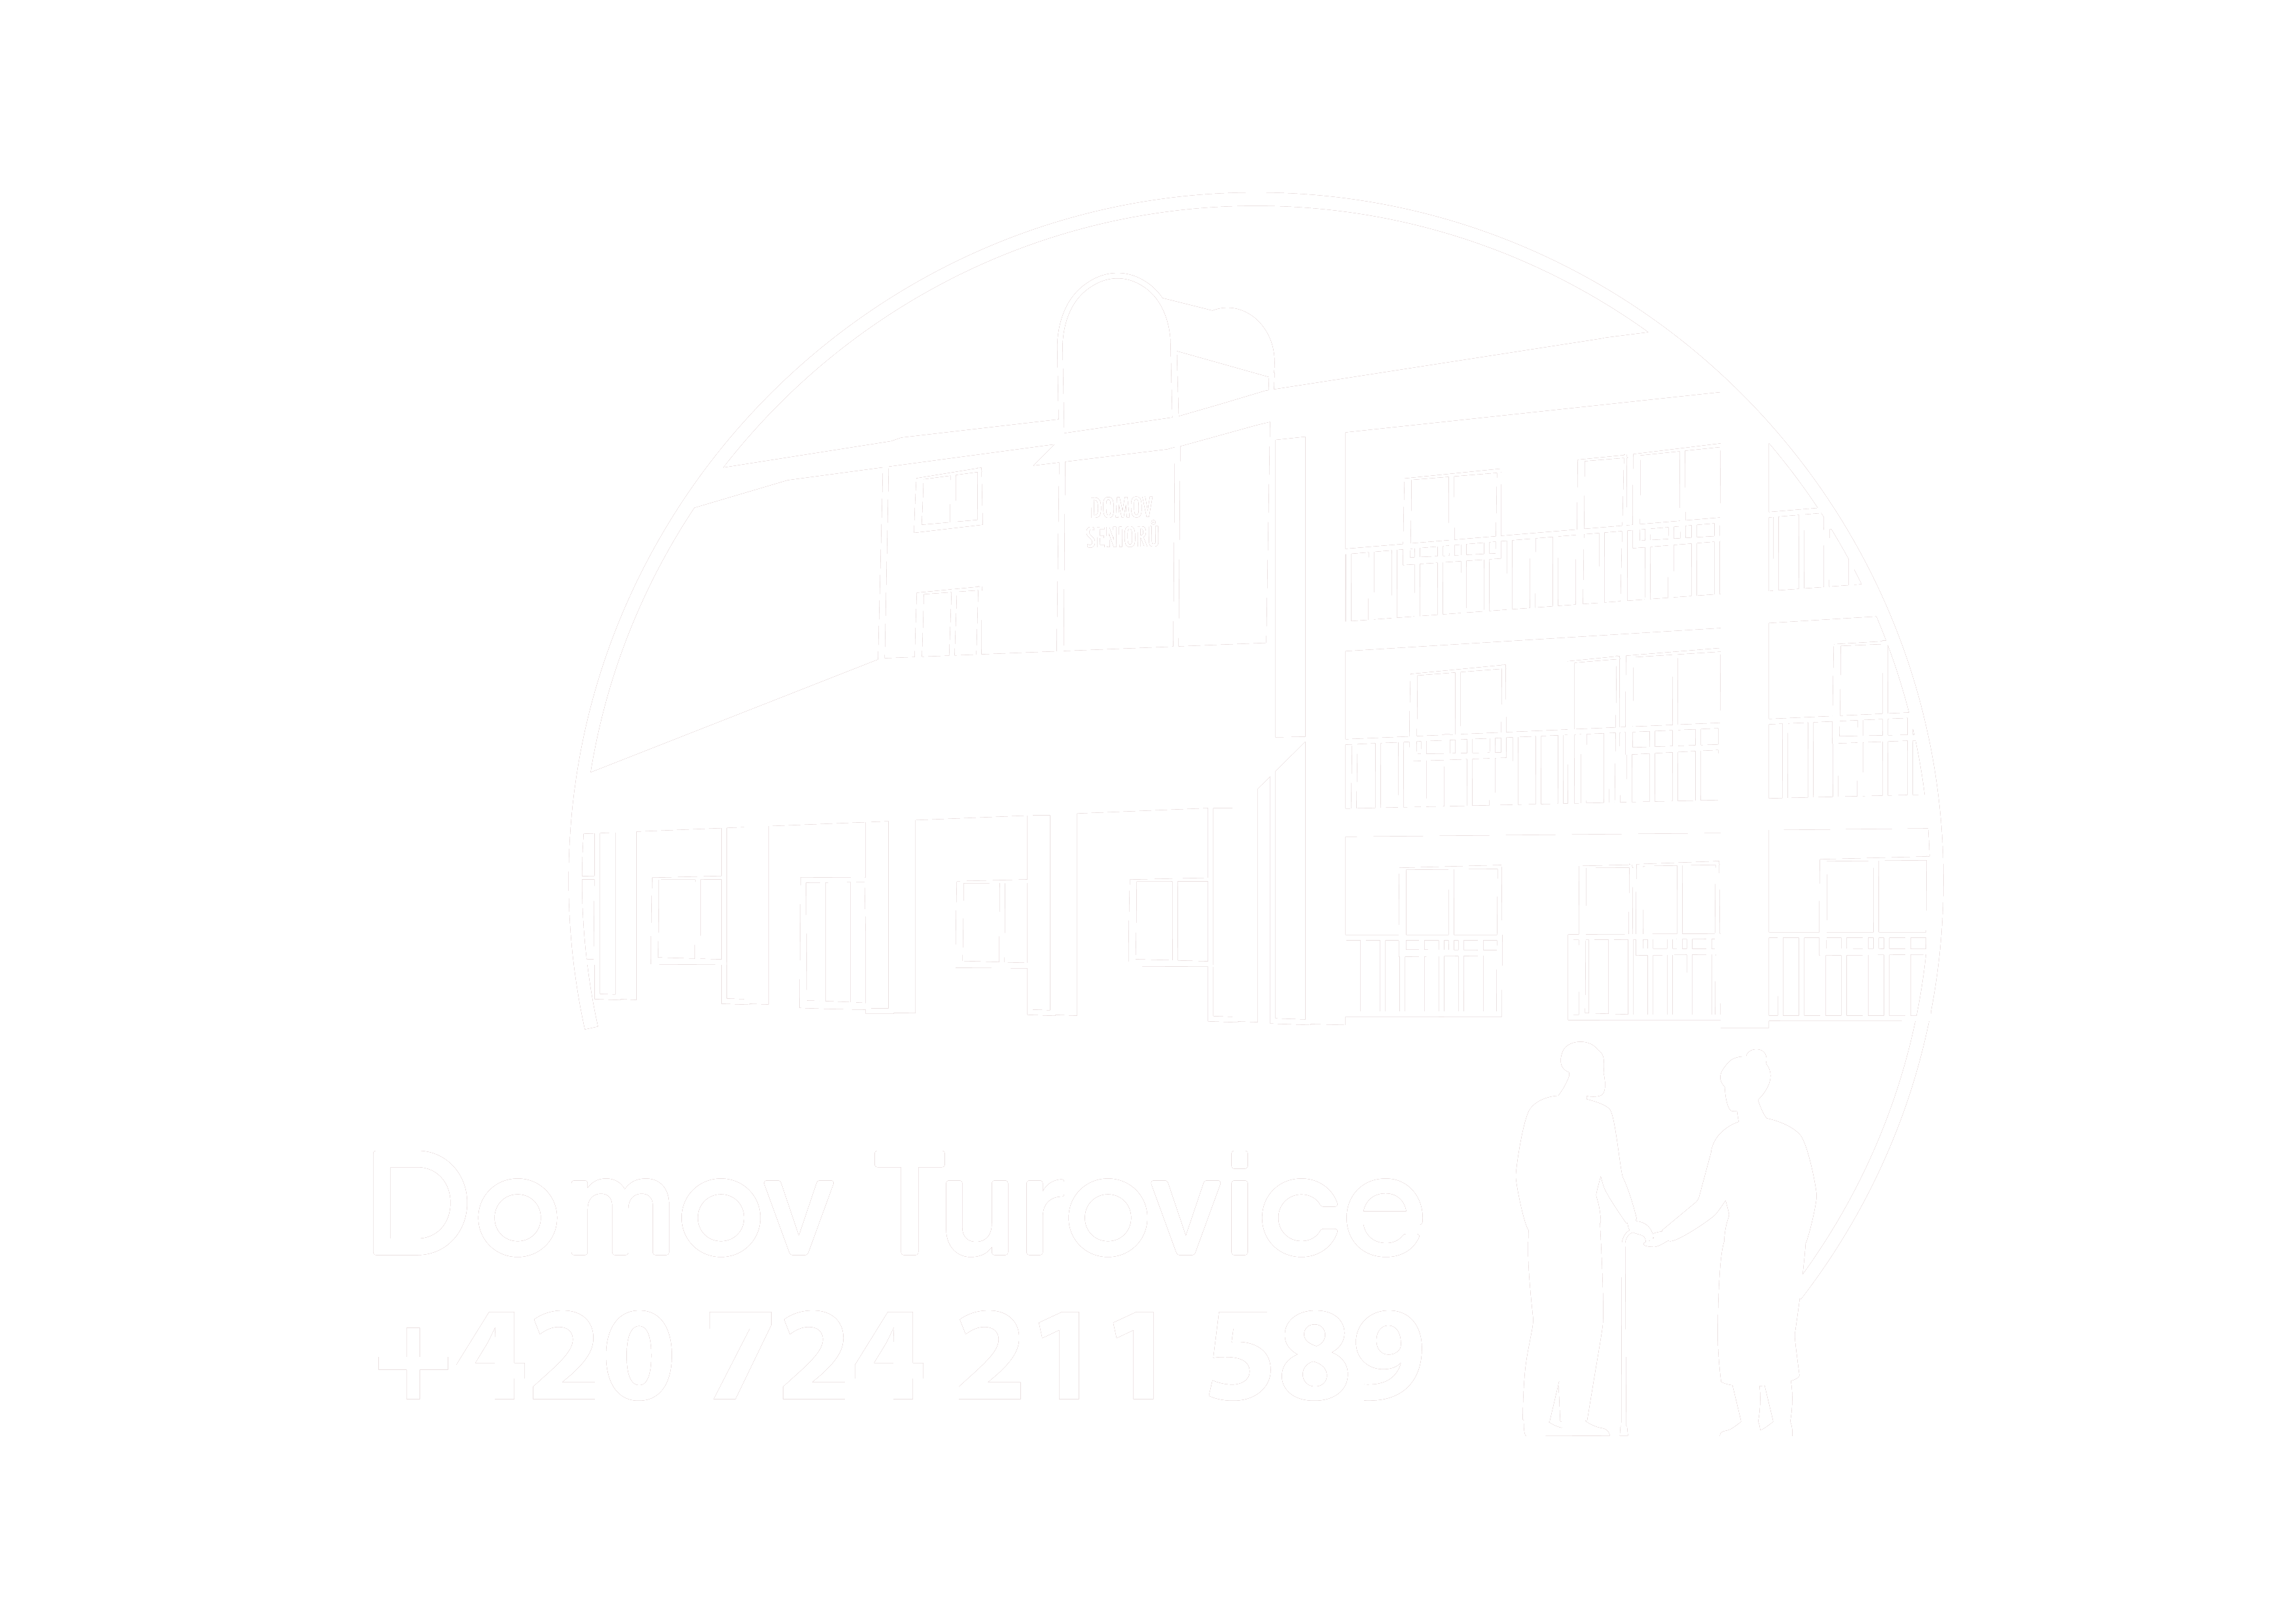 Domov_Turovice-white